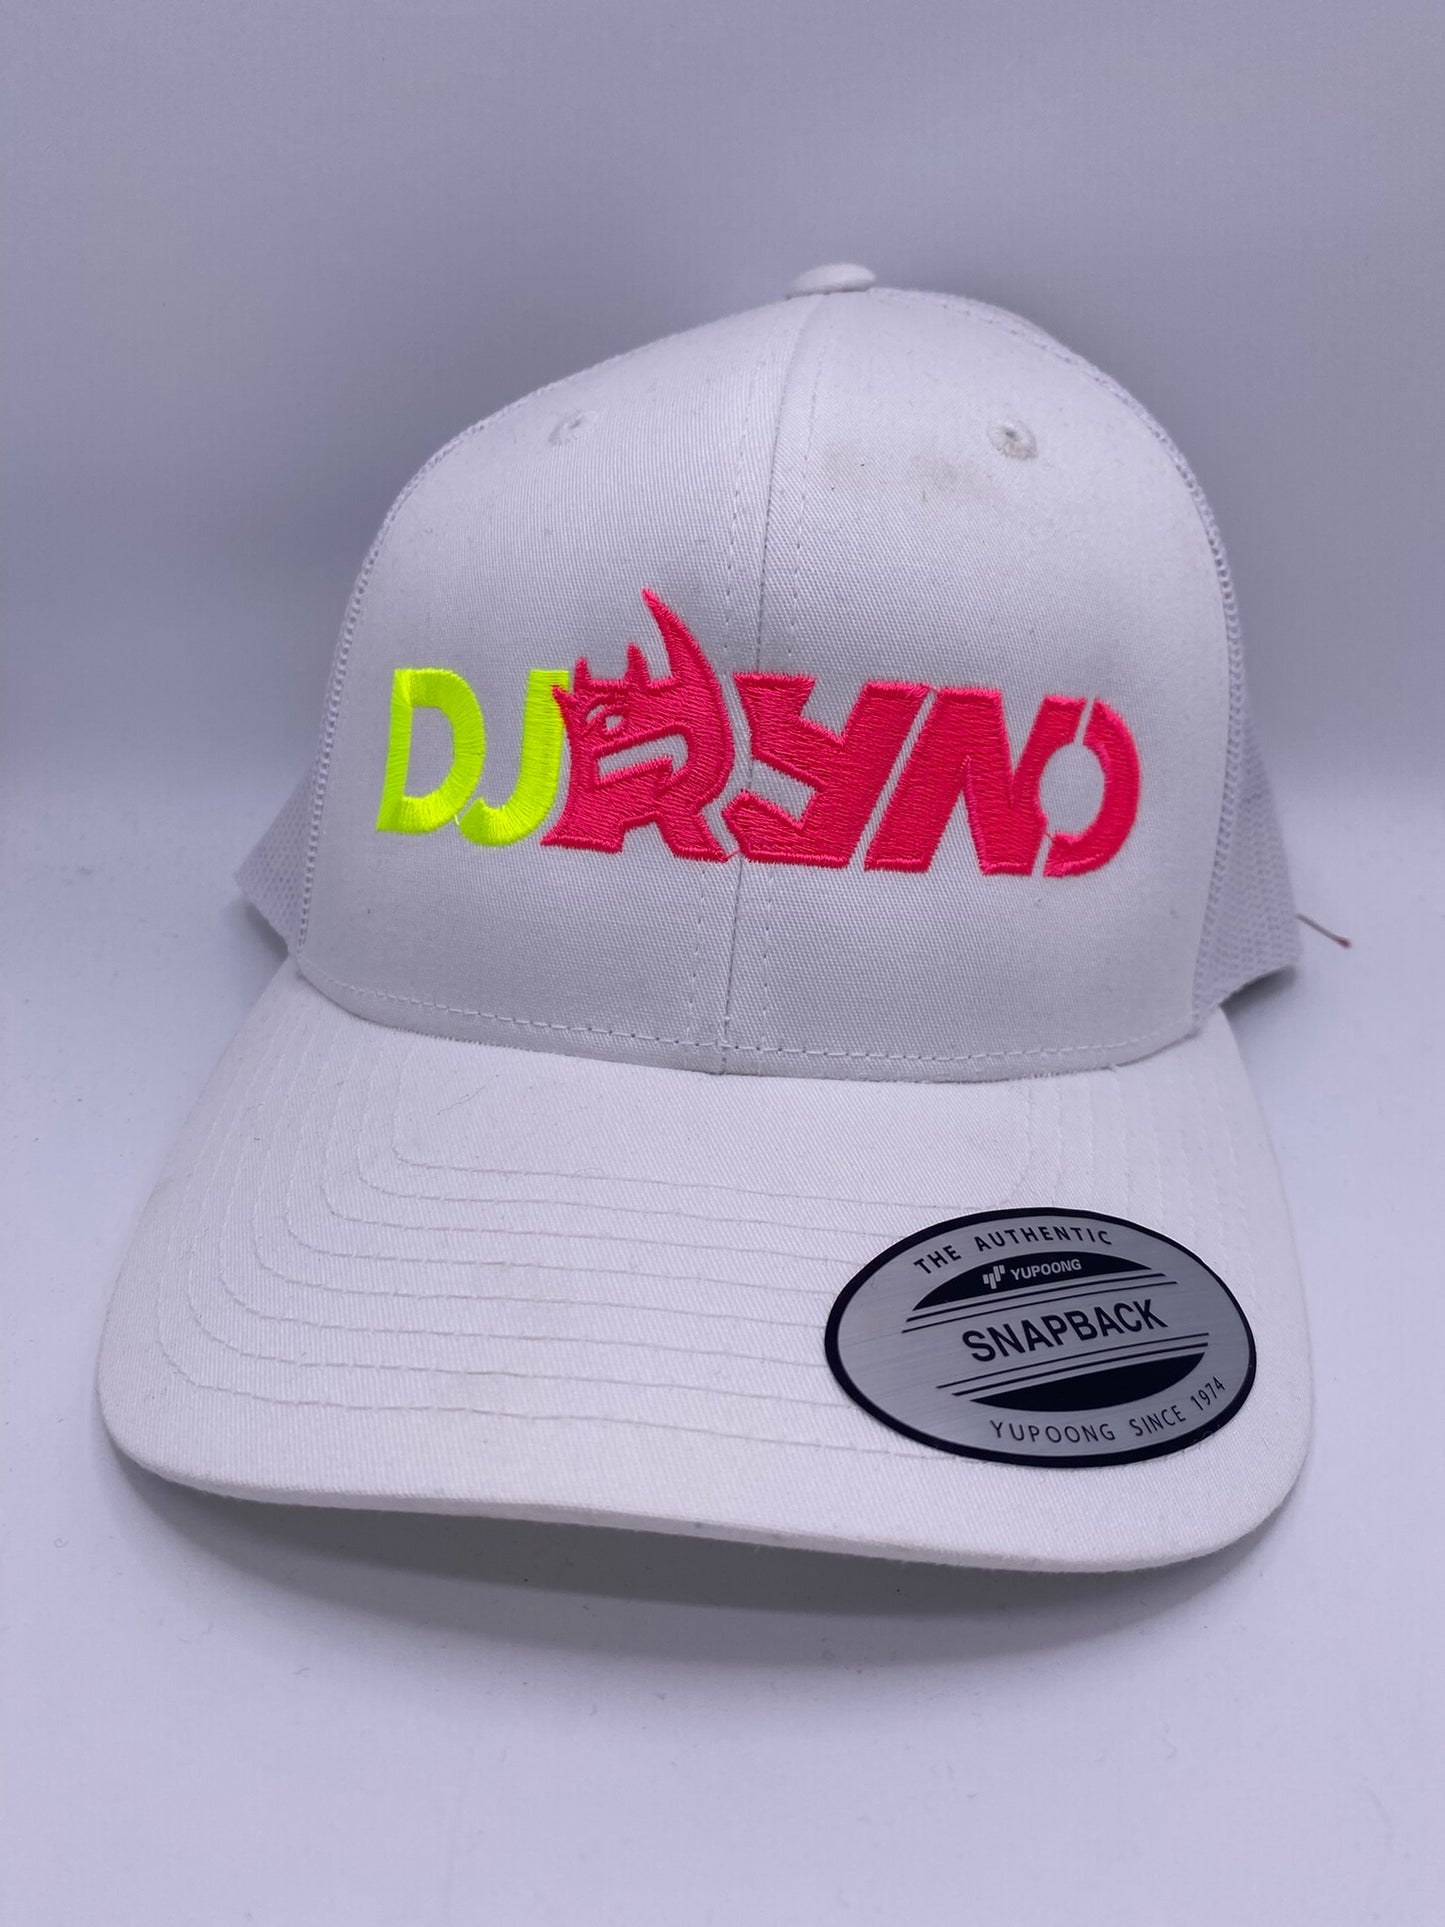 DJ Ryno Neon Hats